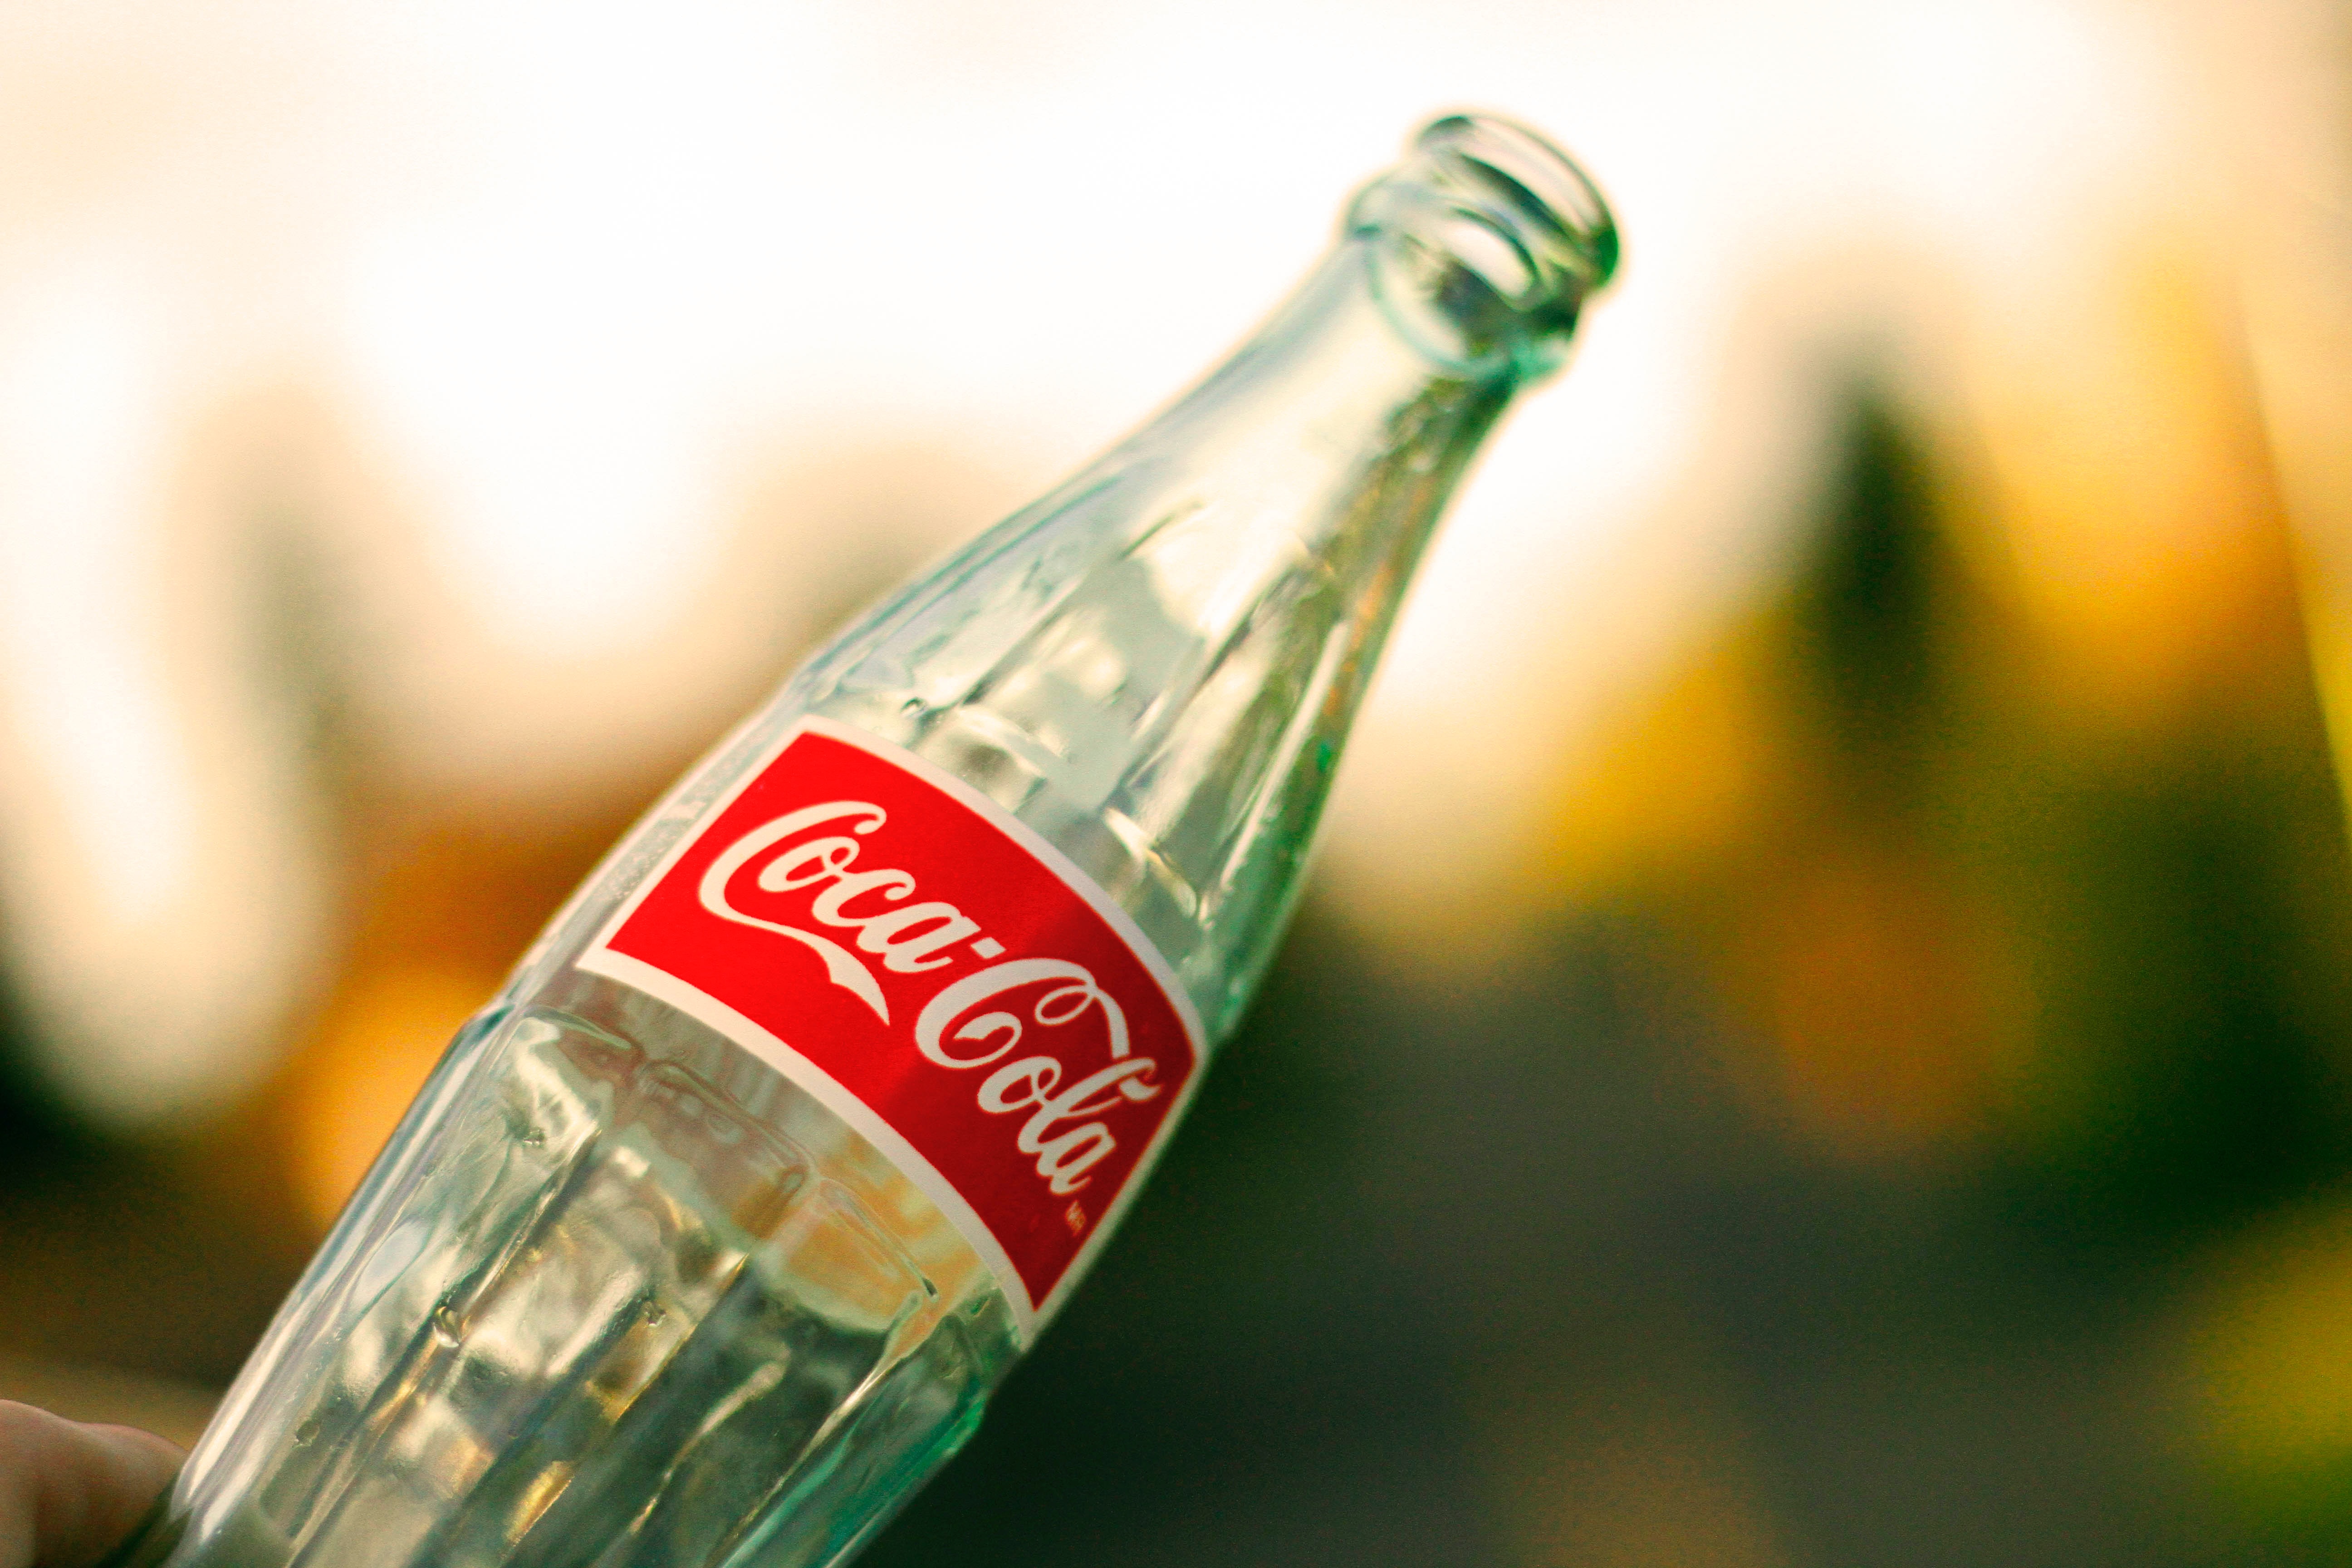 coca cola marketing strategy analysis